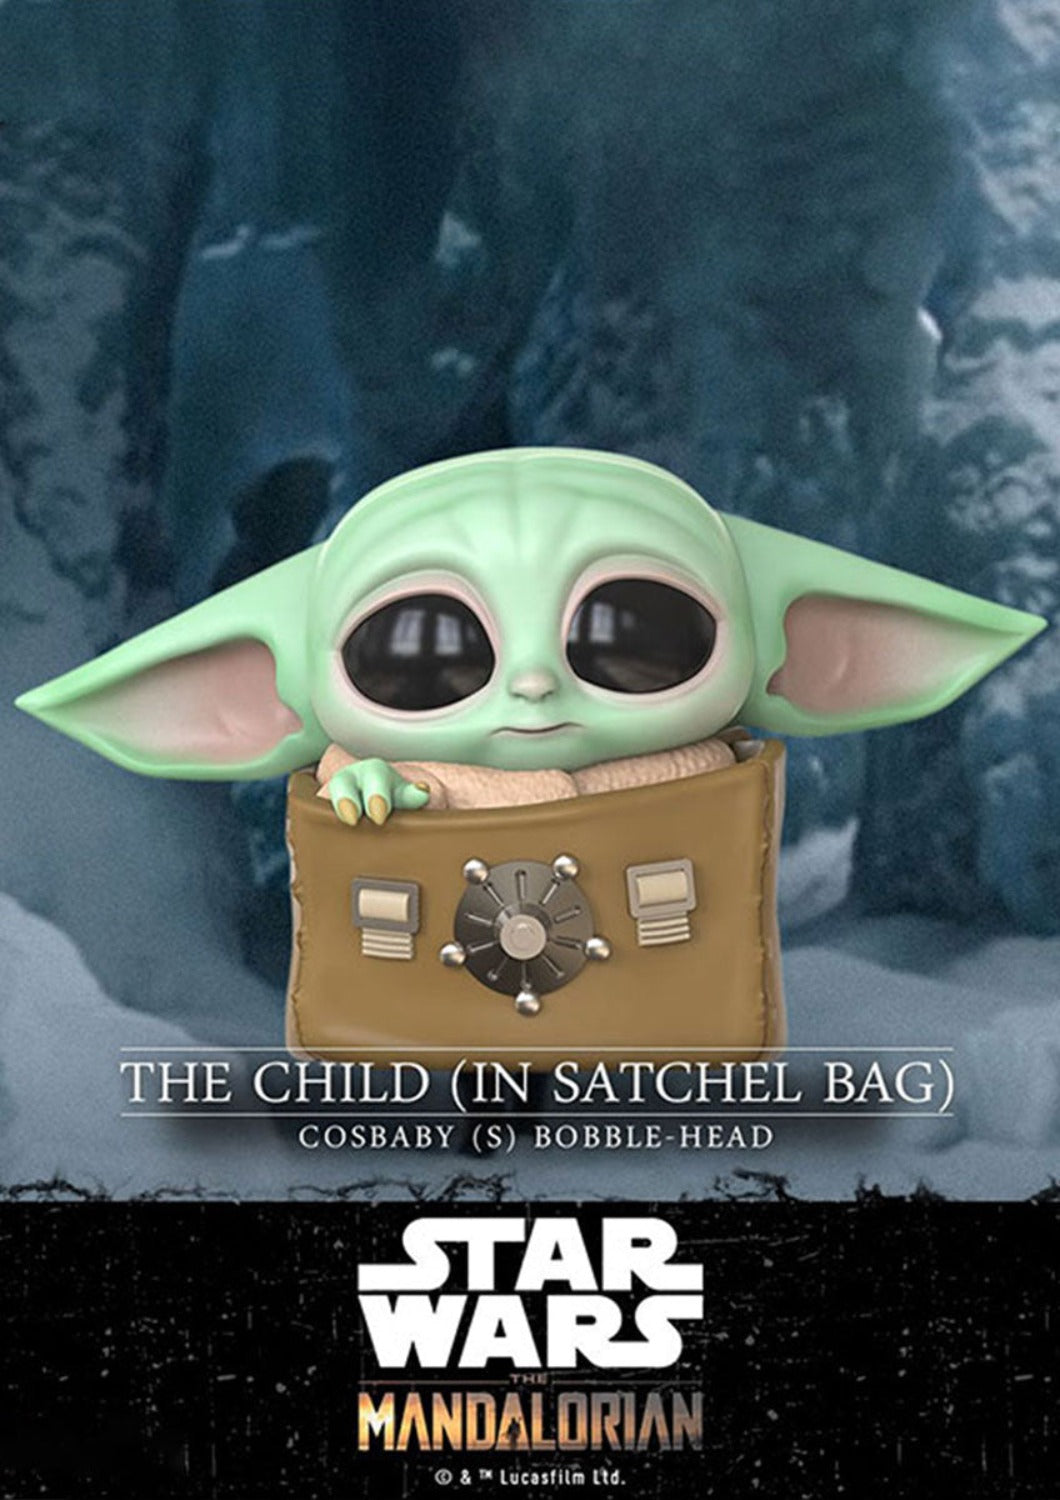 THE CHILD IN SATCHEL BAG